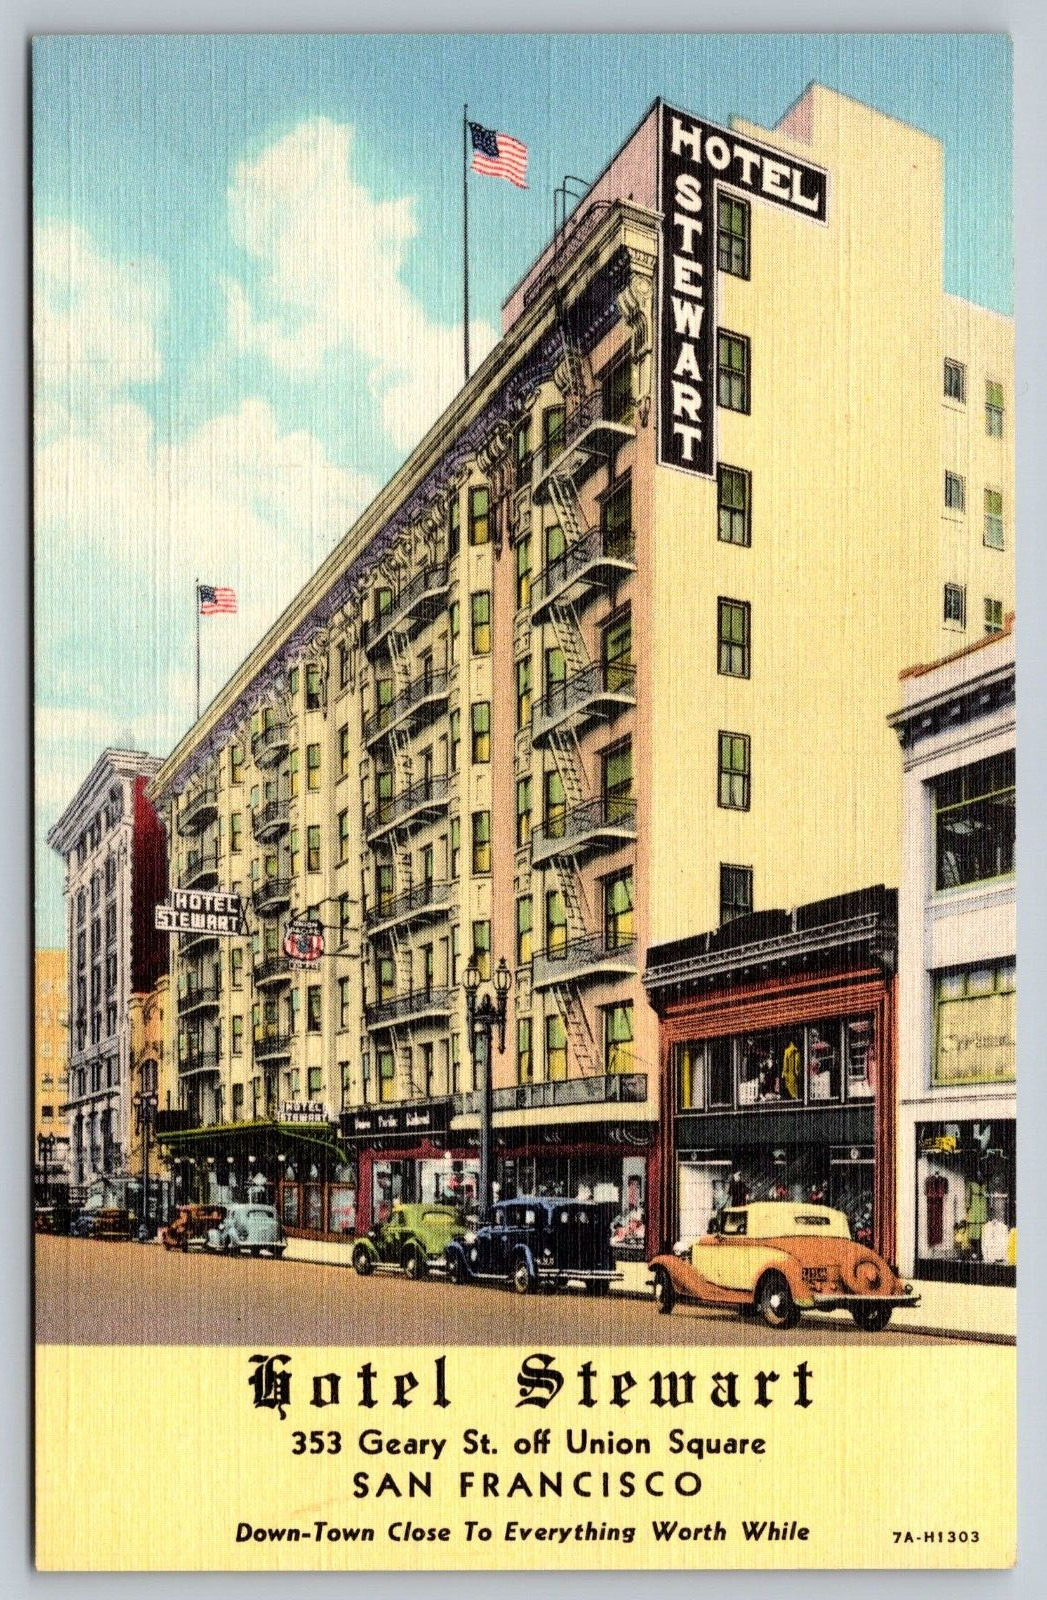 Antique Postcard “Hotel Stewart” San Francisco